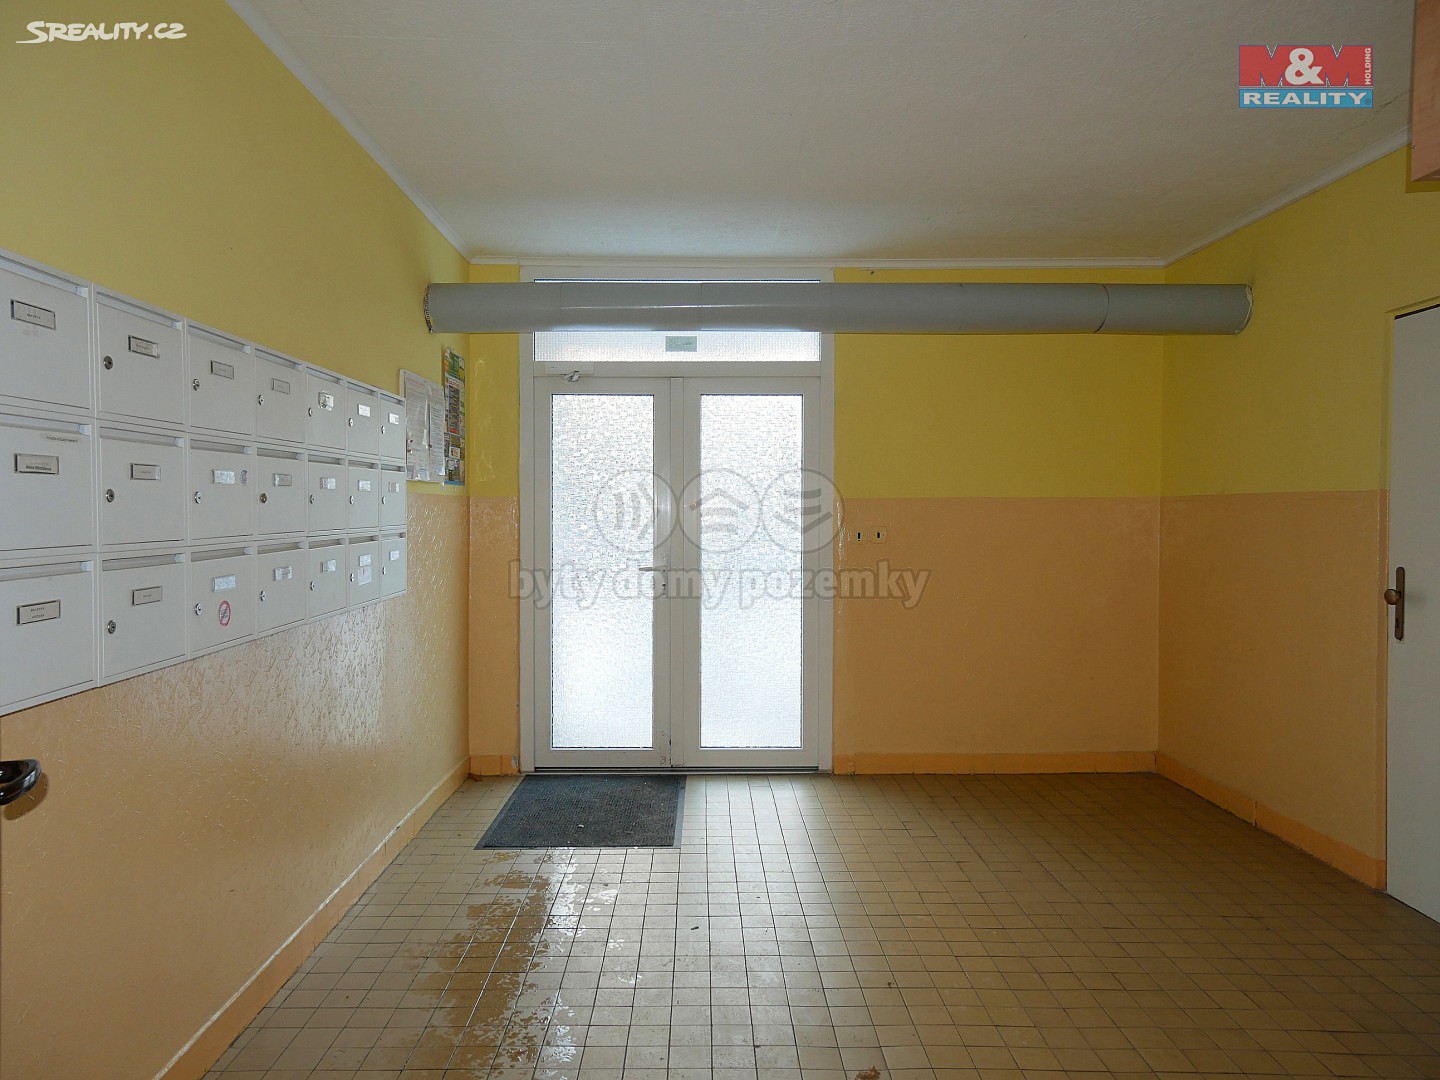 Pronájem bytu 1+1 36 m², Buchenwaldská, Karlovy Vary - Rybáře